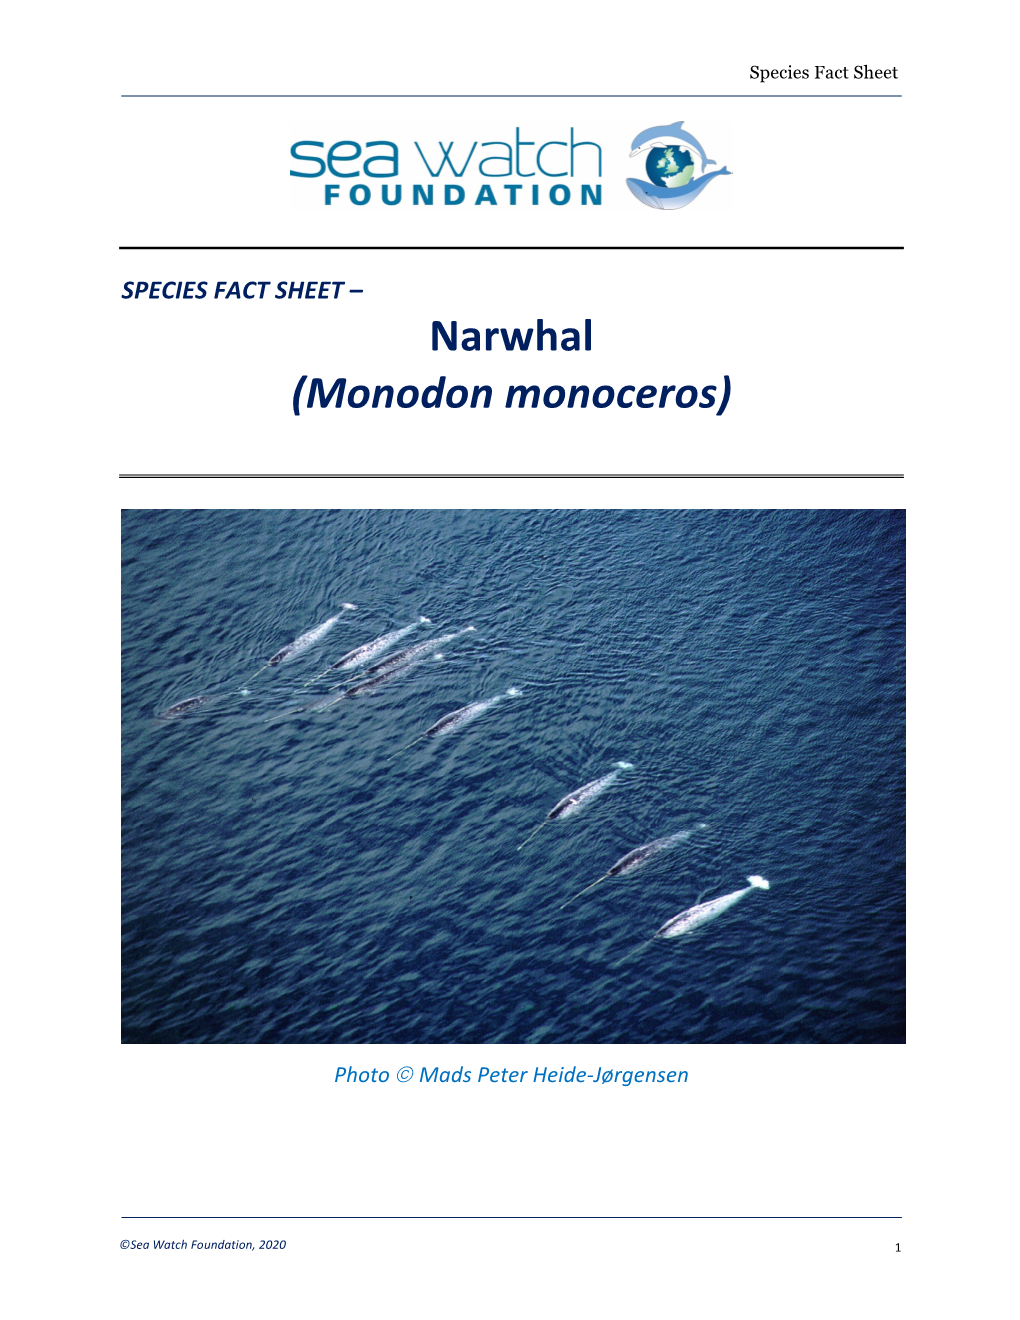 Narwhal (Monodon Monoceros)